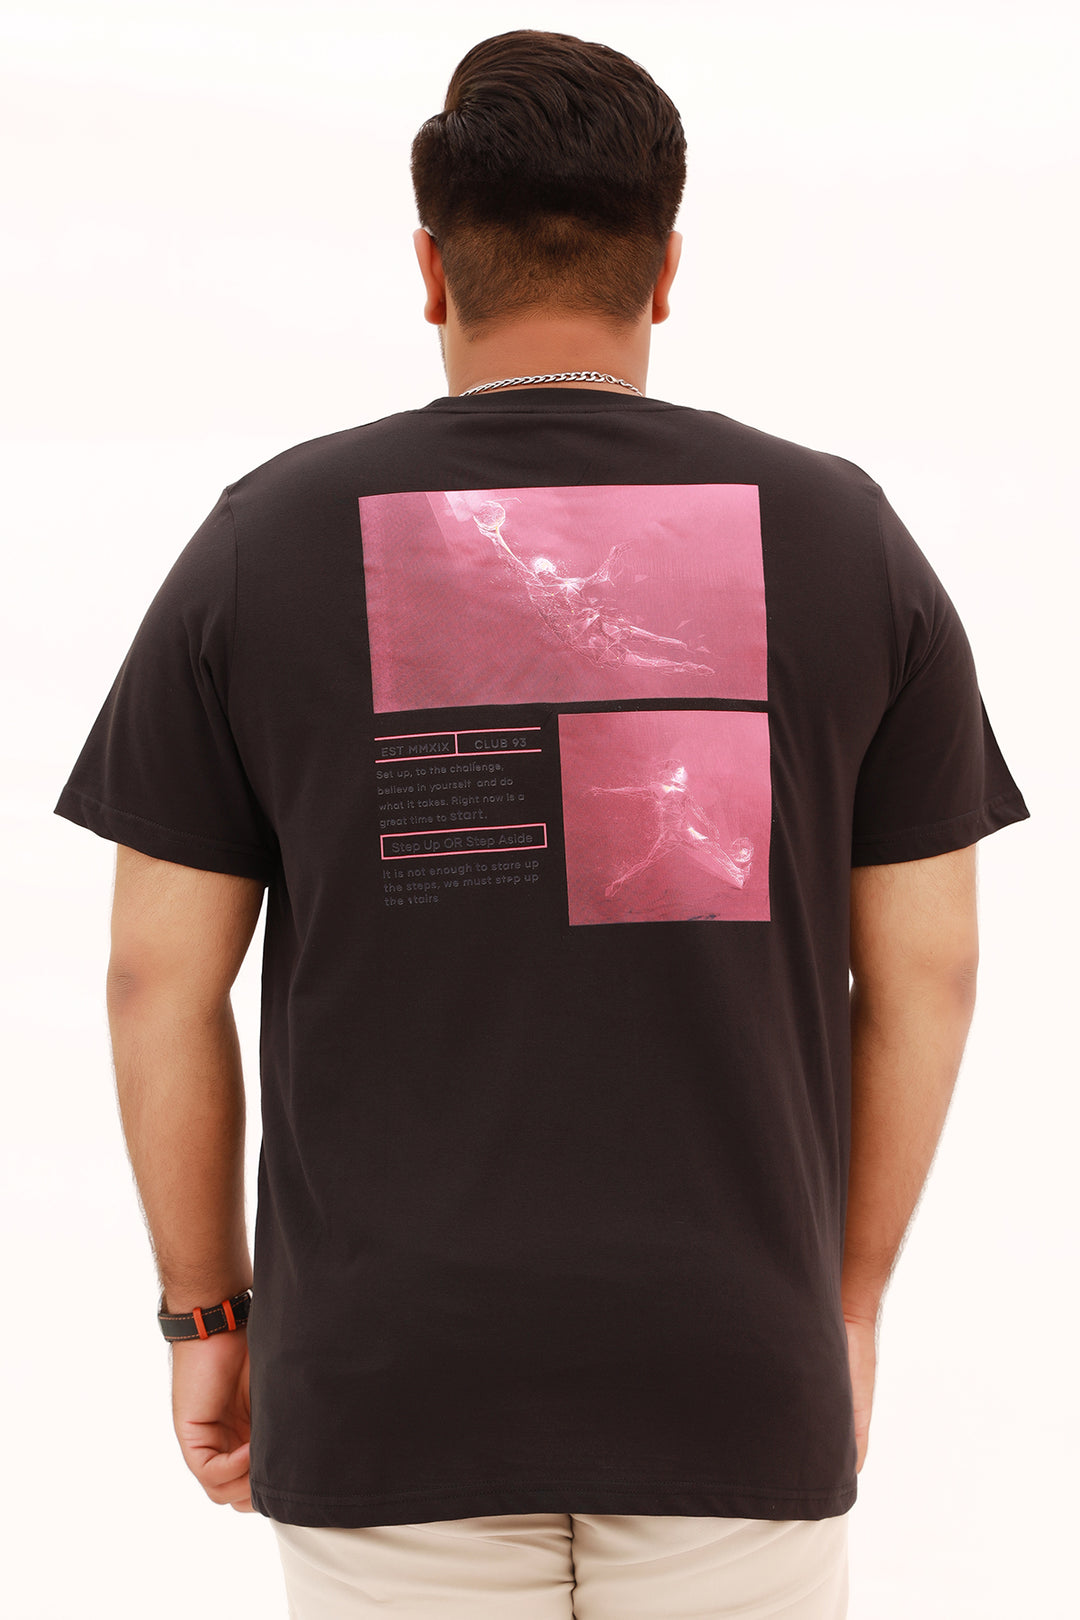 Step Up Graphic T-Shirt (Plus Size) - S22 - MT0166P